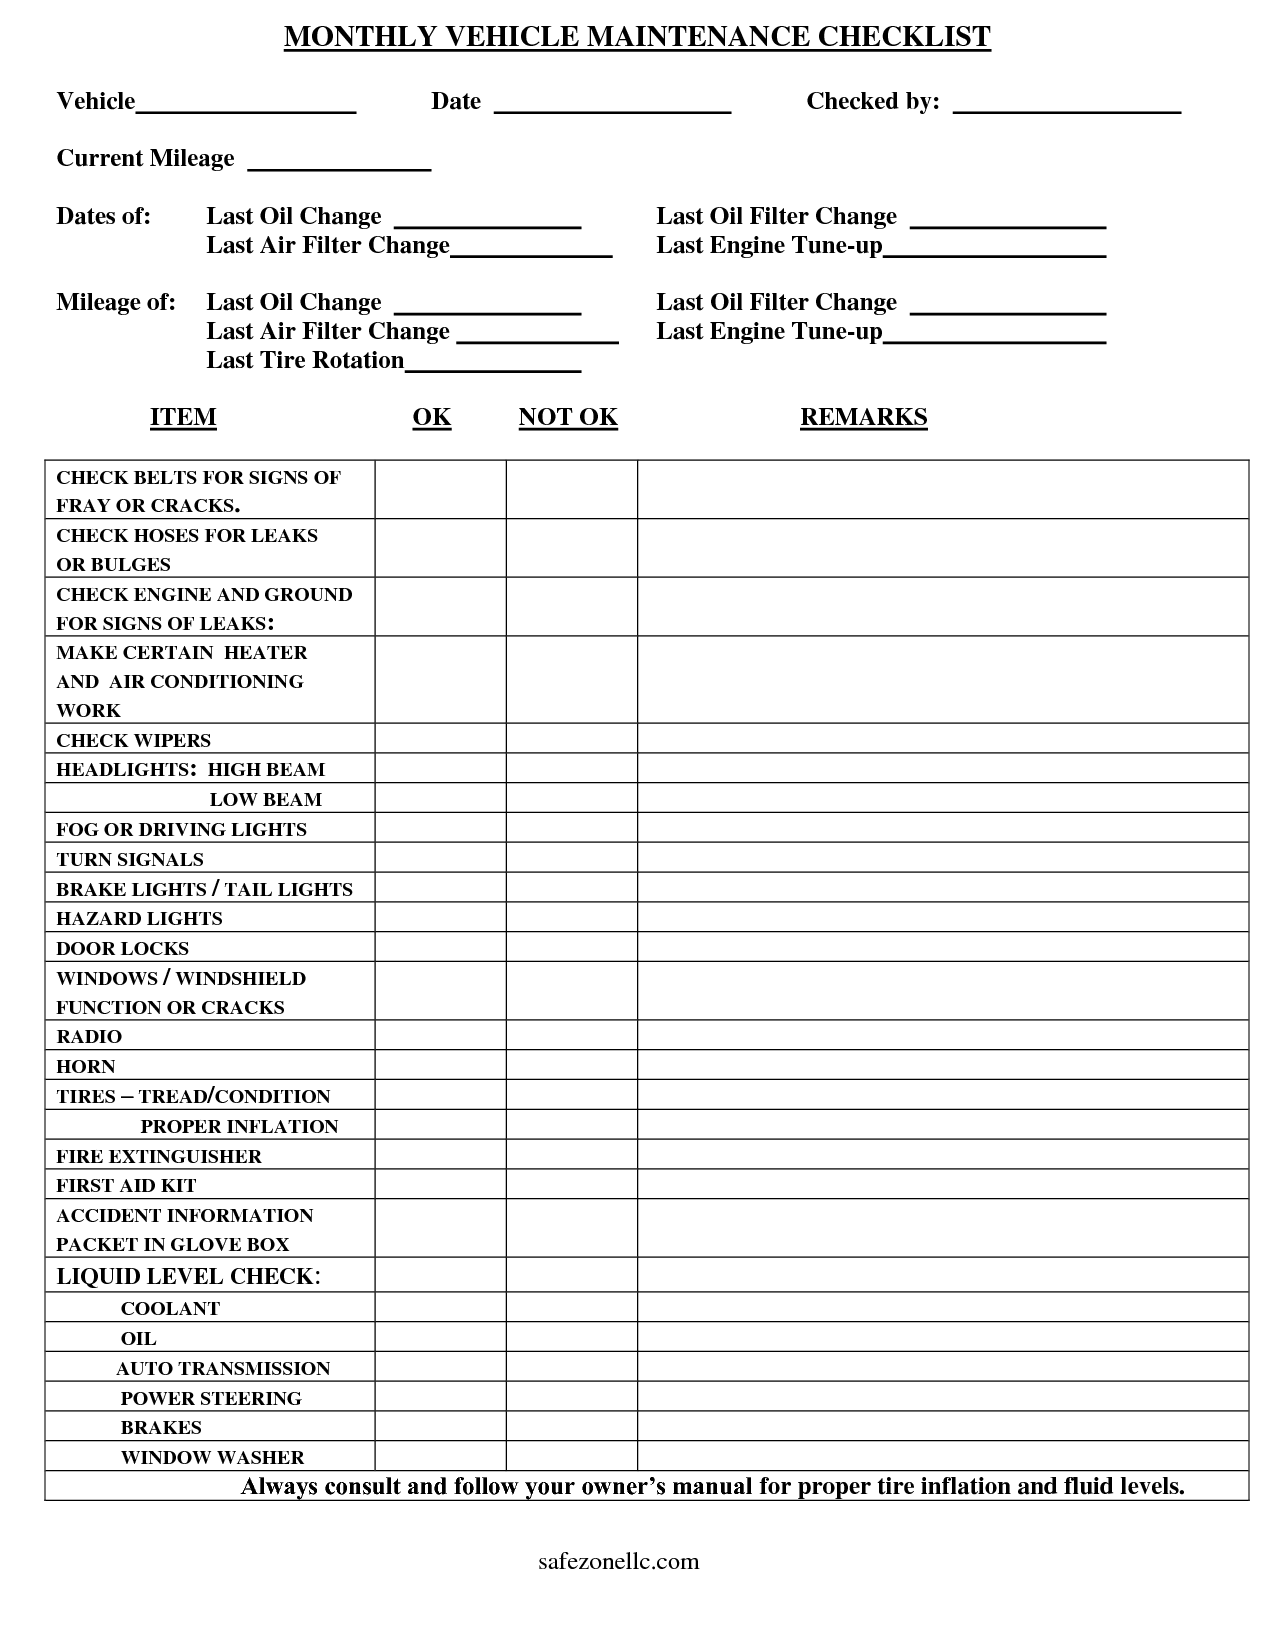 Vehicle Maintenance Checklist Template Image